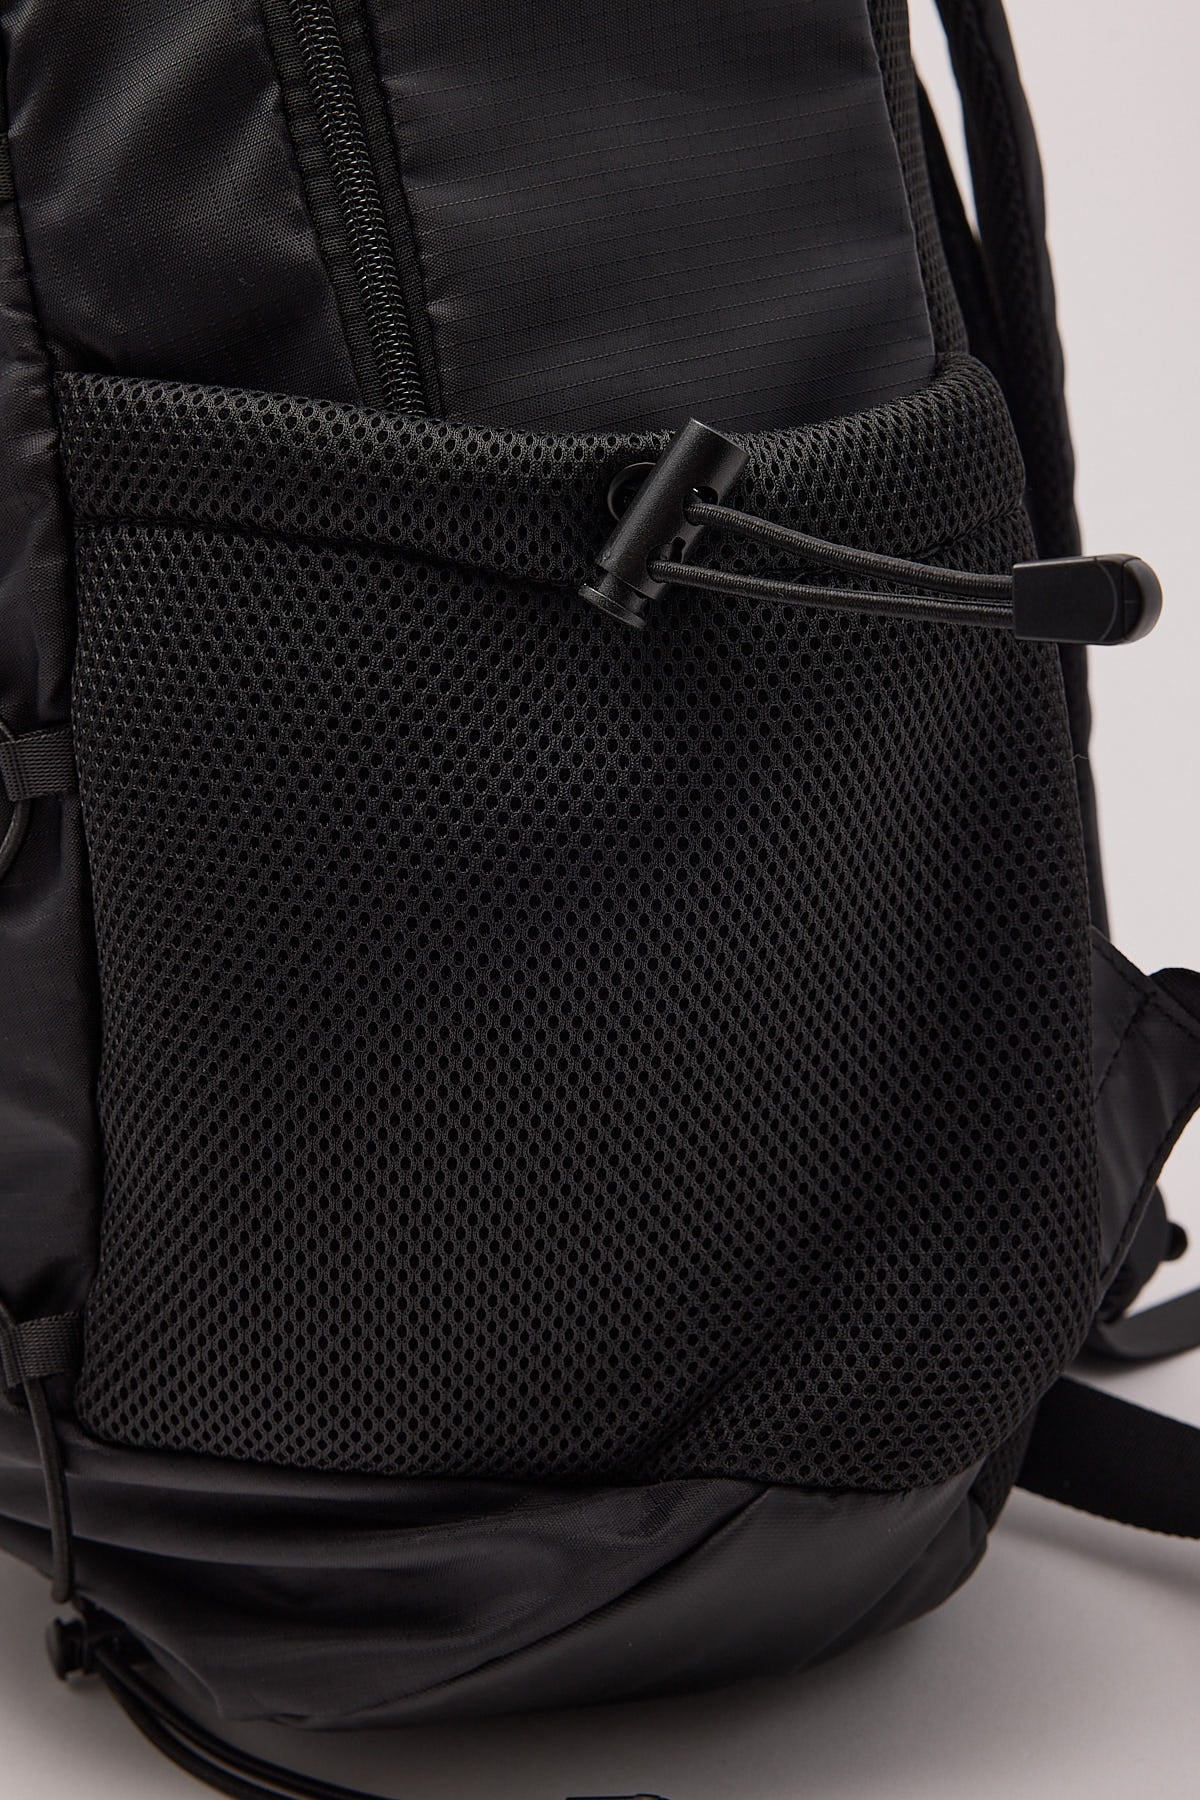 Neovision Sprint Backpack Black – Universal Store